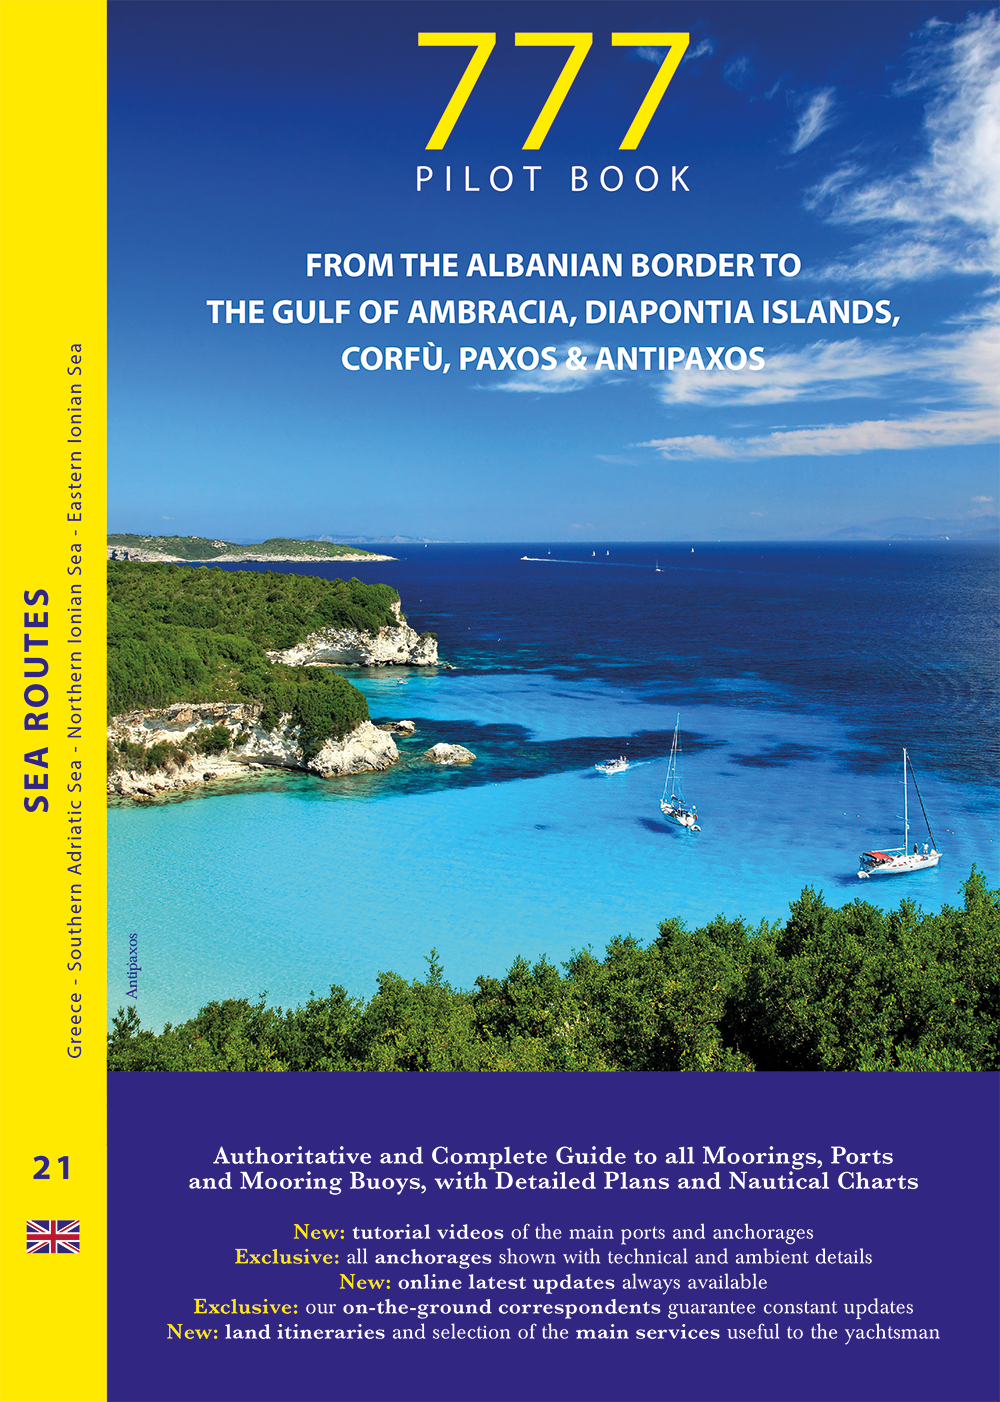 From the Albanian border to the Gulf of Ambracia, Diapontia Islands, Corfù, Paxos & Antipaxos